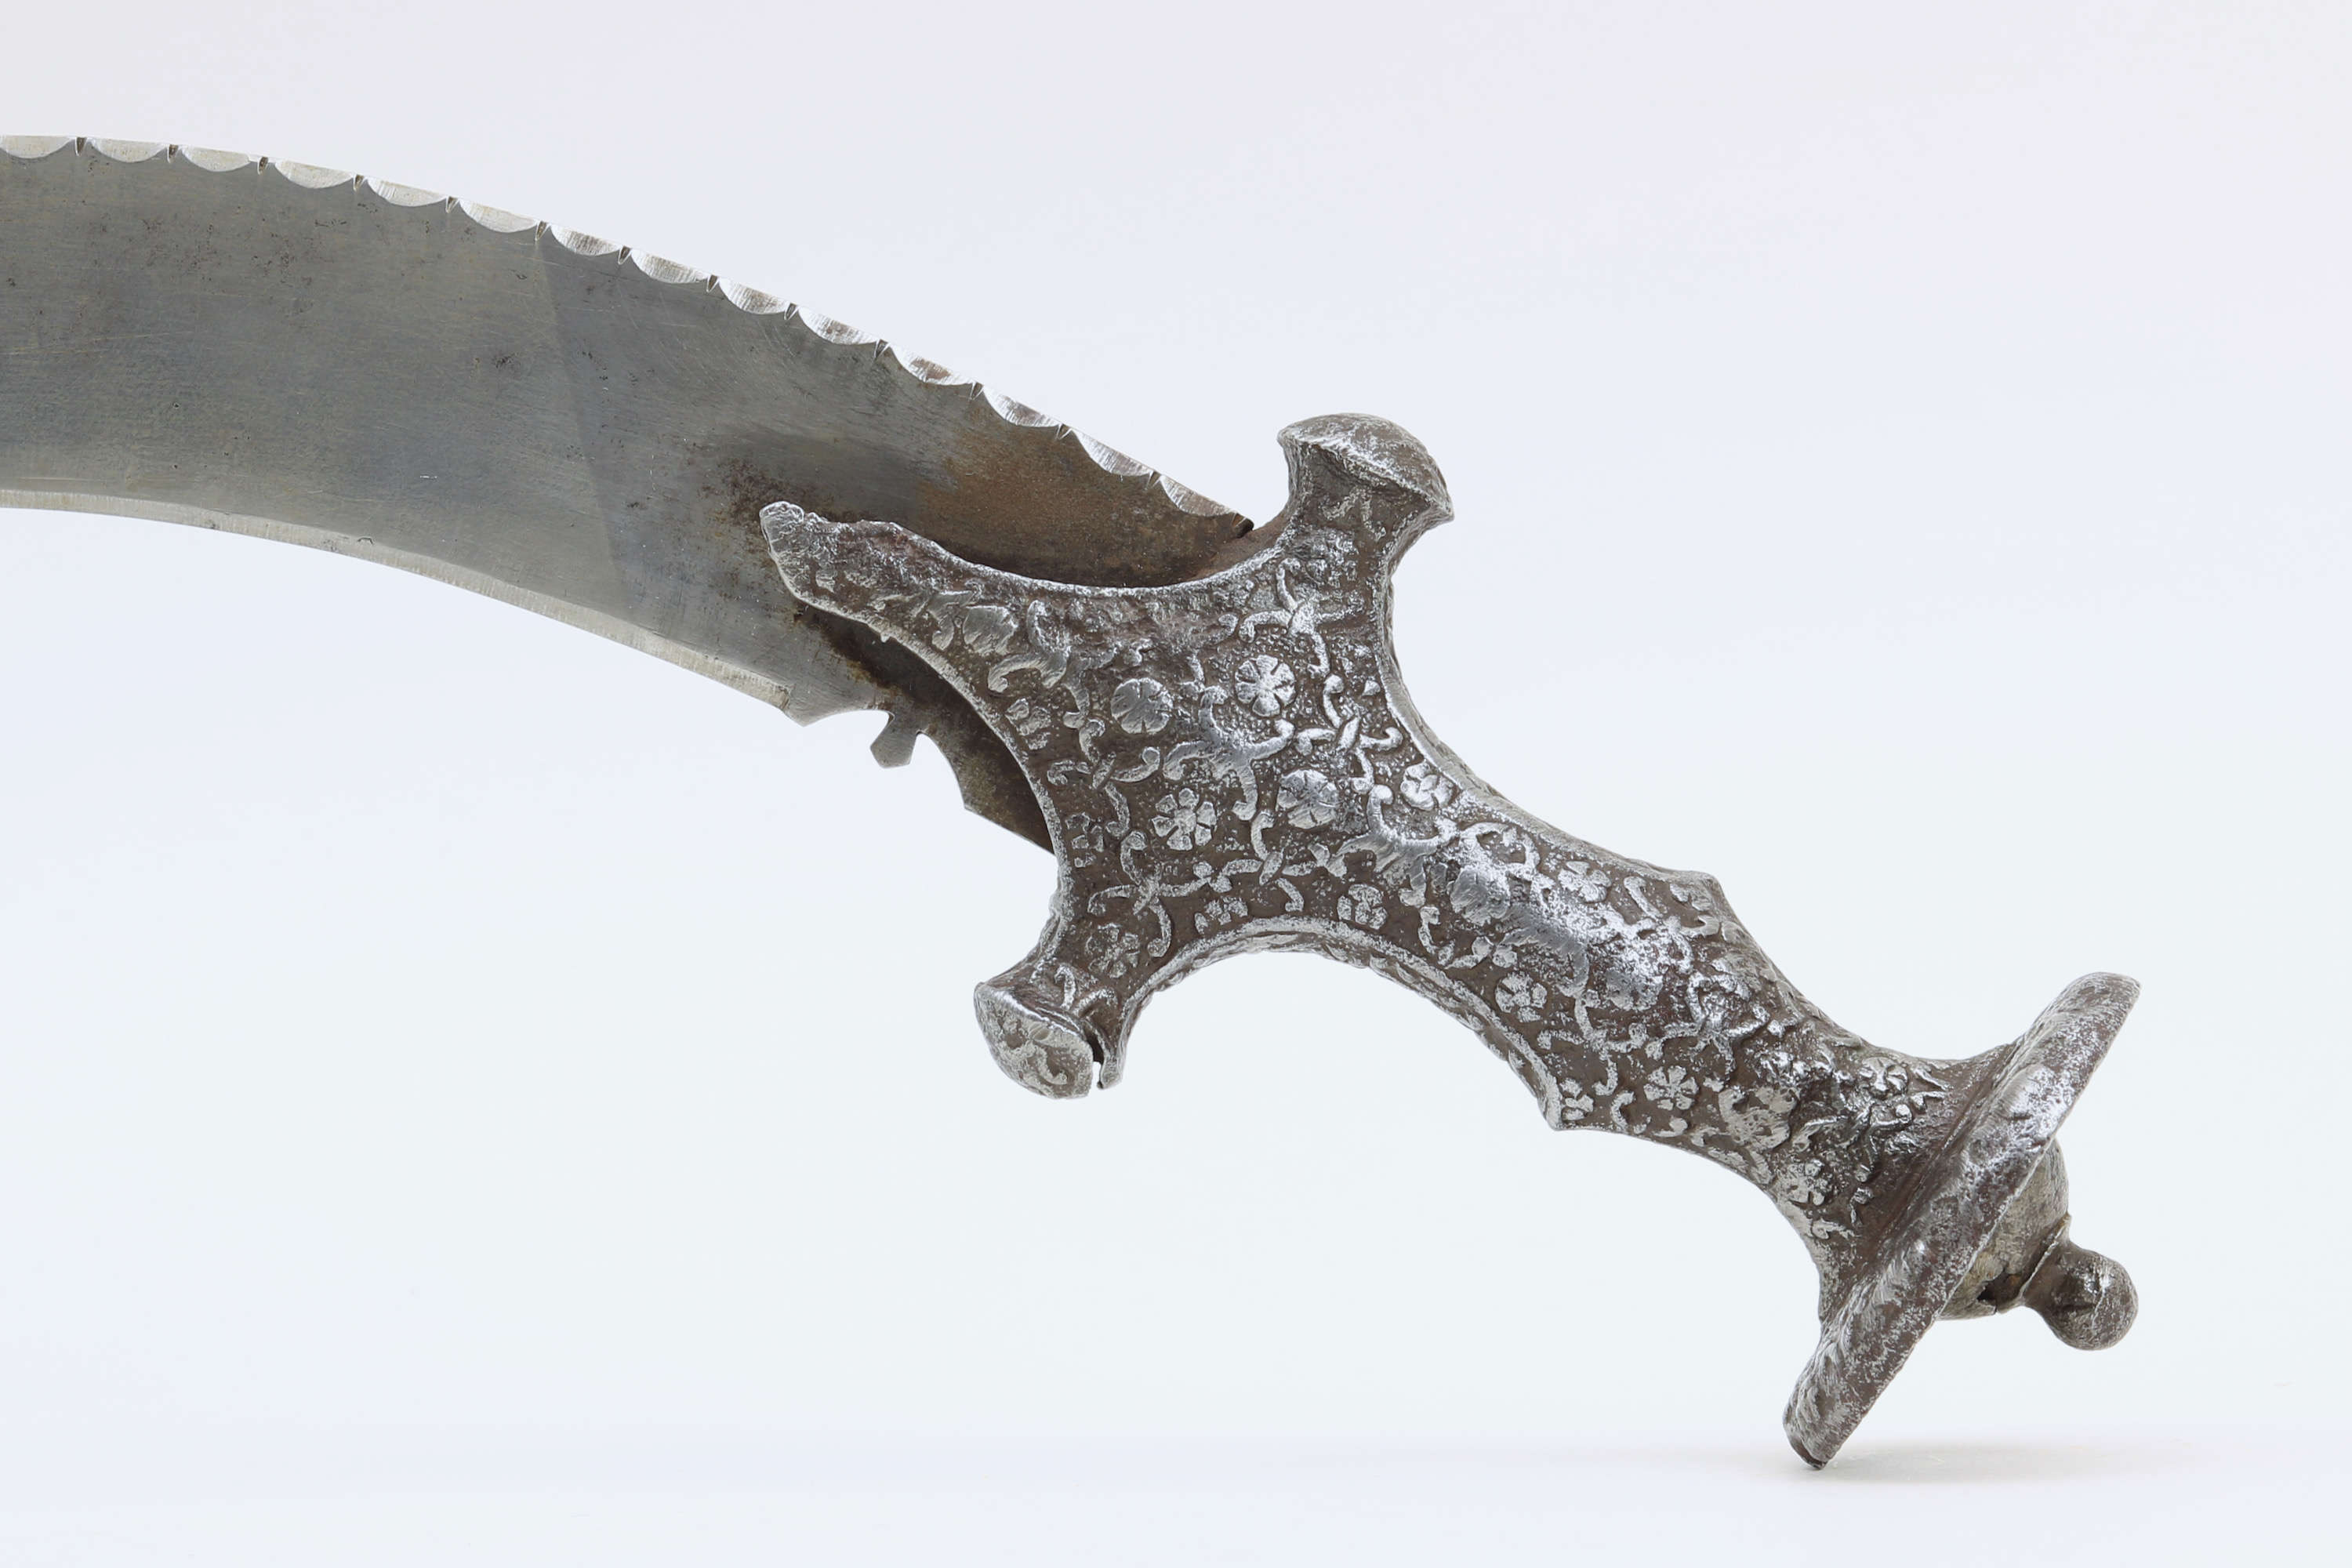 Unusual S shaped Indian zulfiqar sword